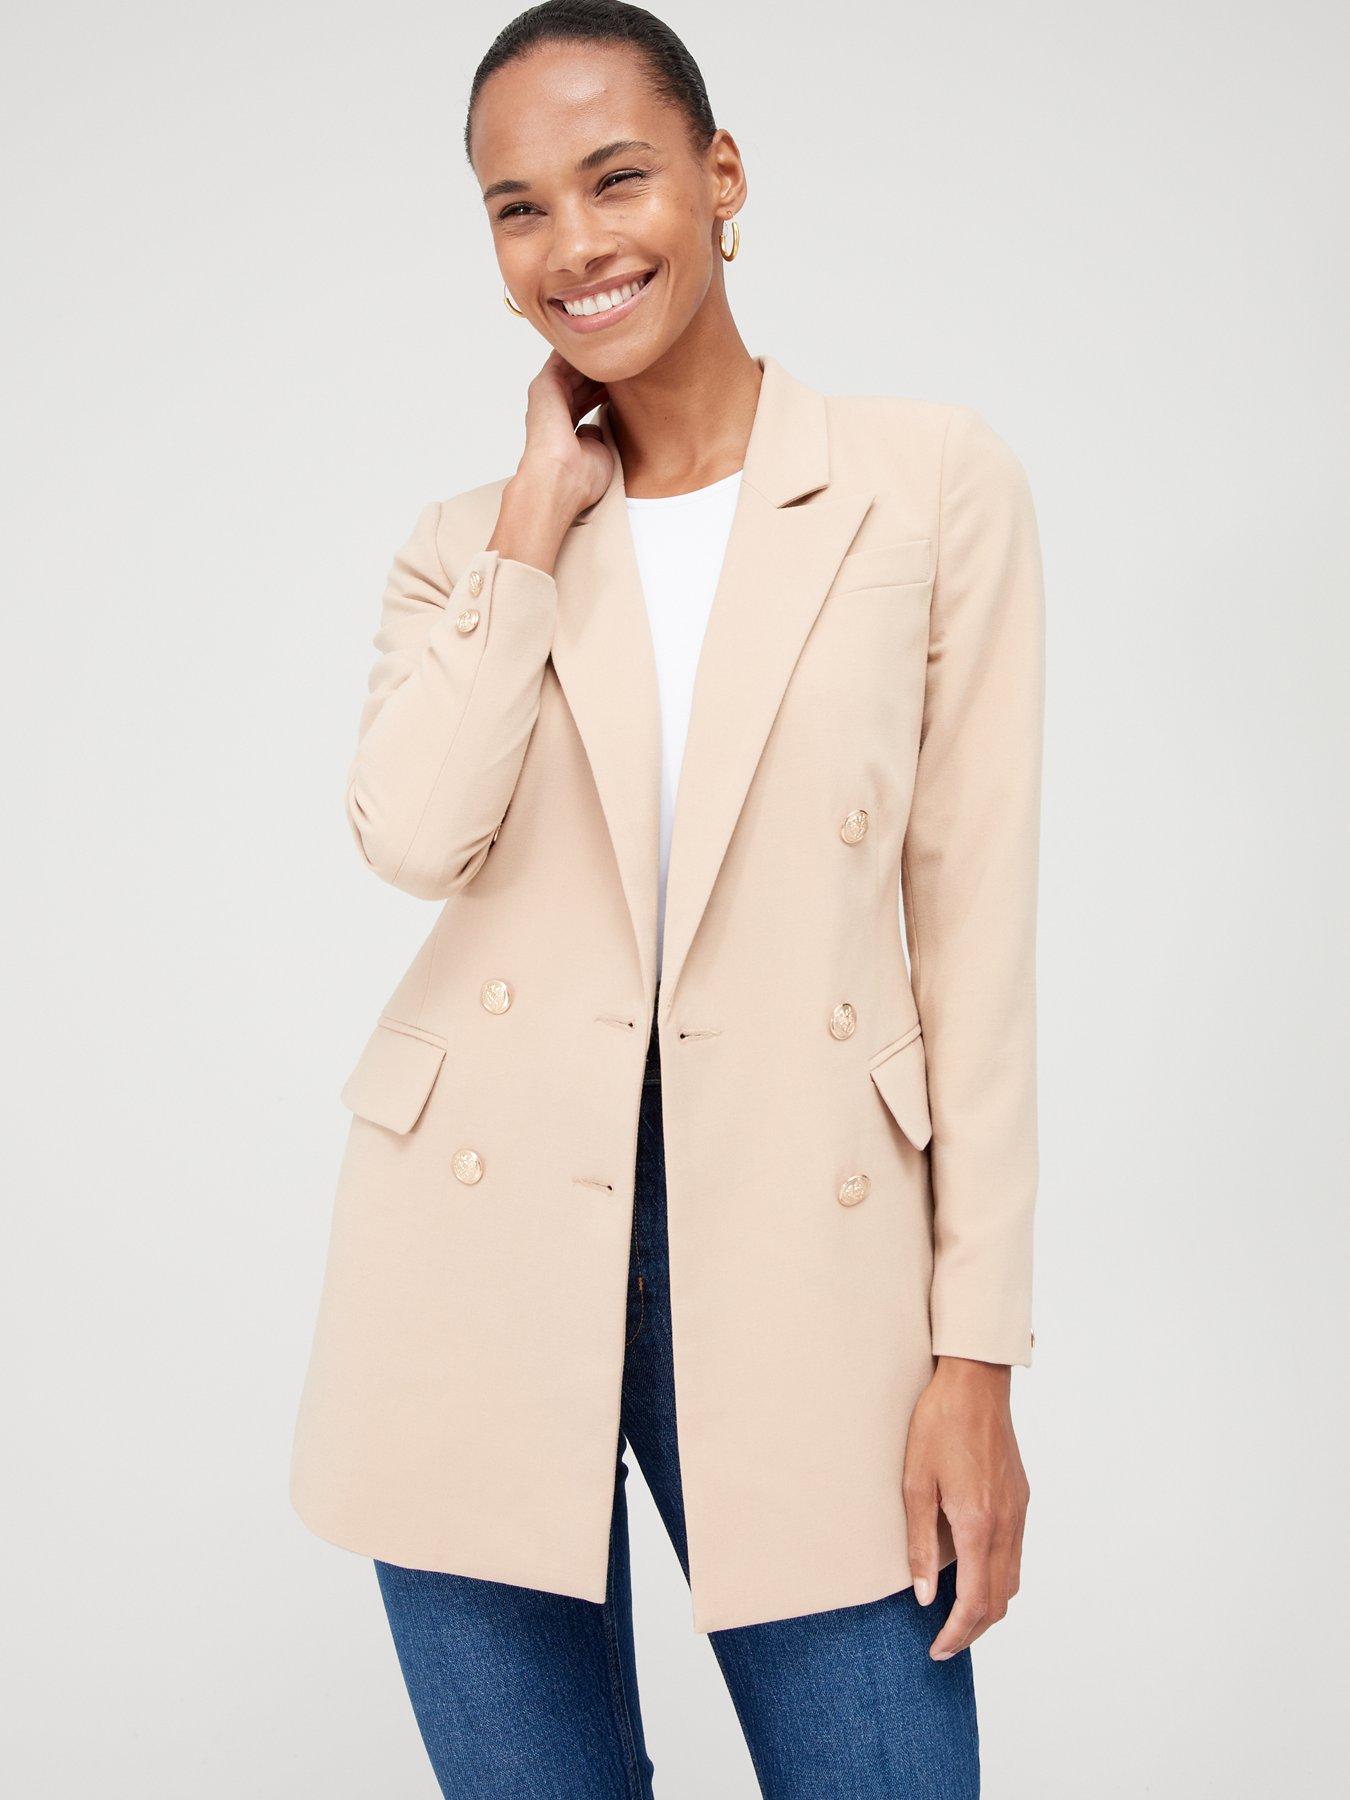 discount 69% Shilla Long coat Black 40                  EU WOMEN FASHION Coats Elegant 